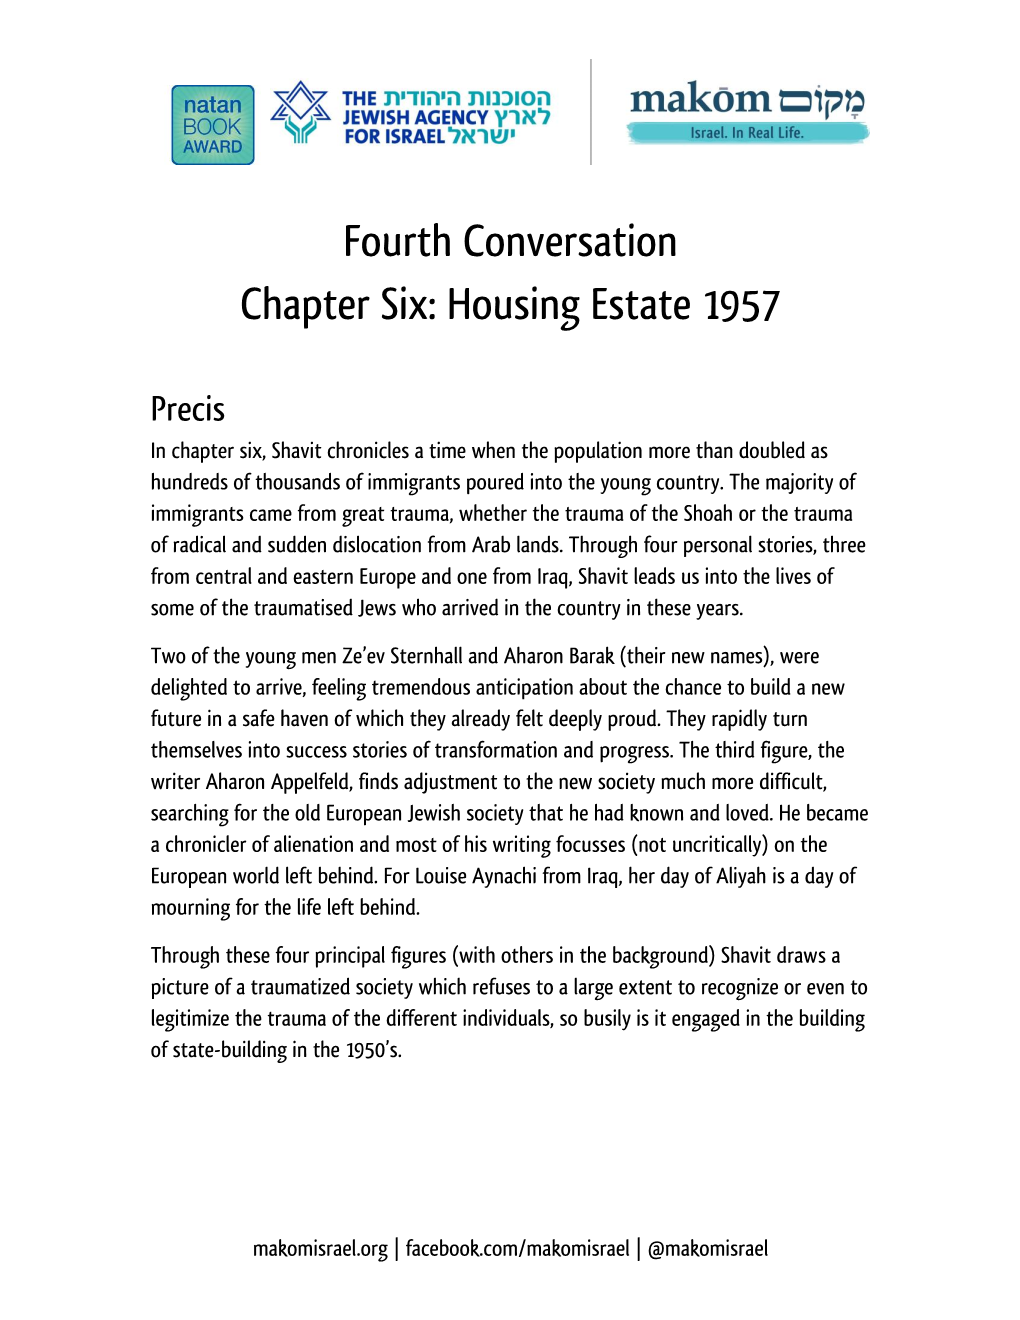 Fourth Conversation Chapter Six: Housing Estate 1957